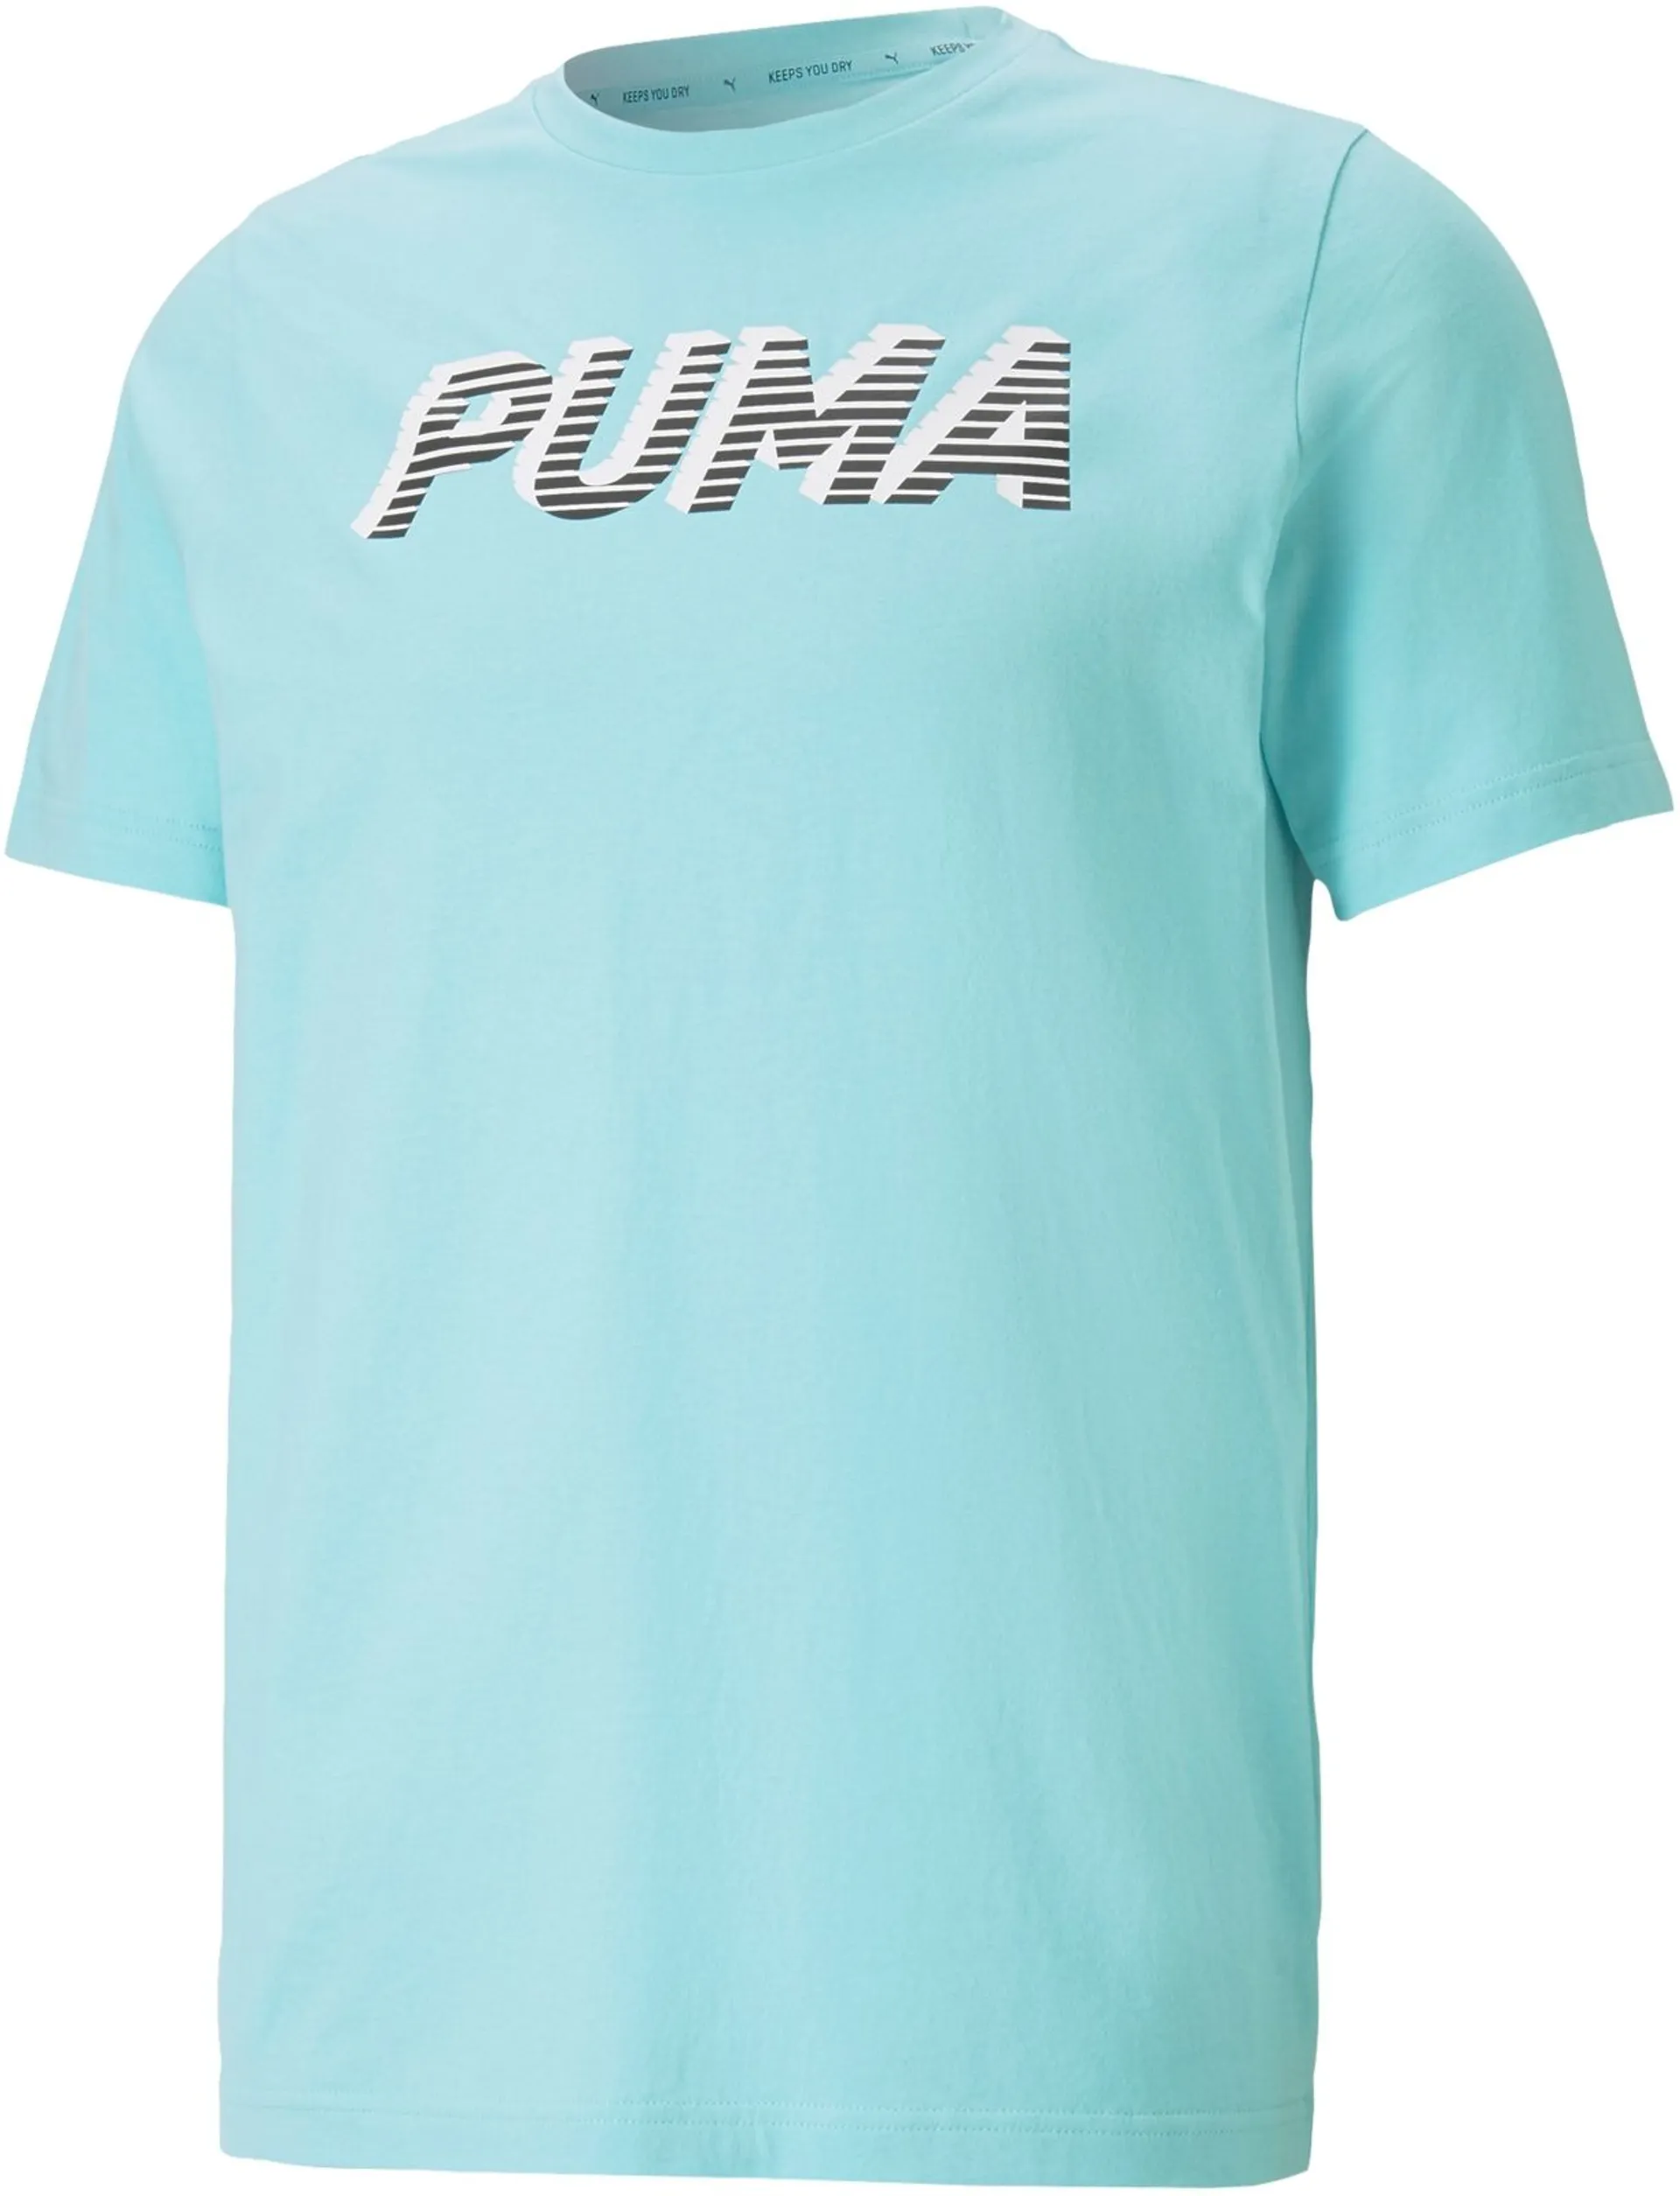 Puma miesten T-paita Modern Sports 585818 - Angel blue - 1